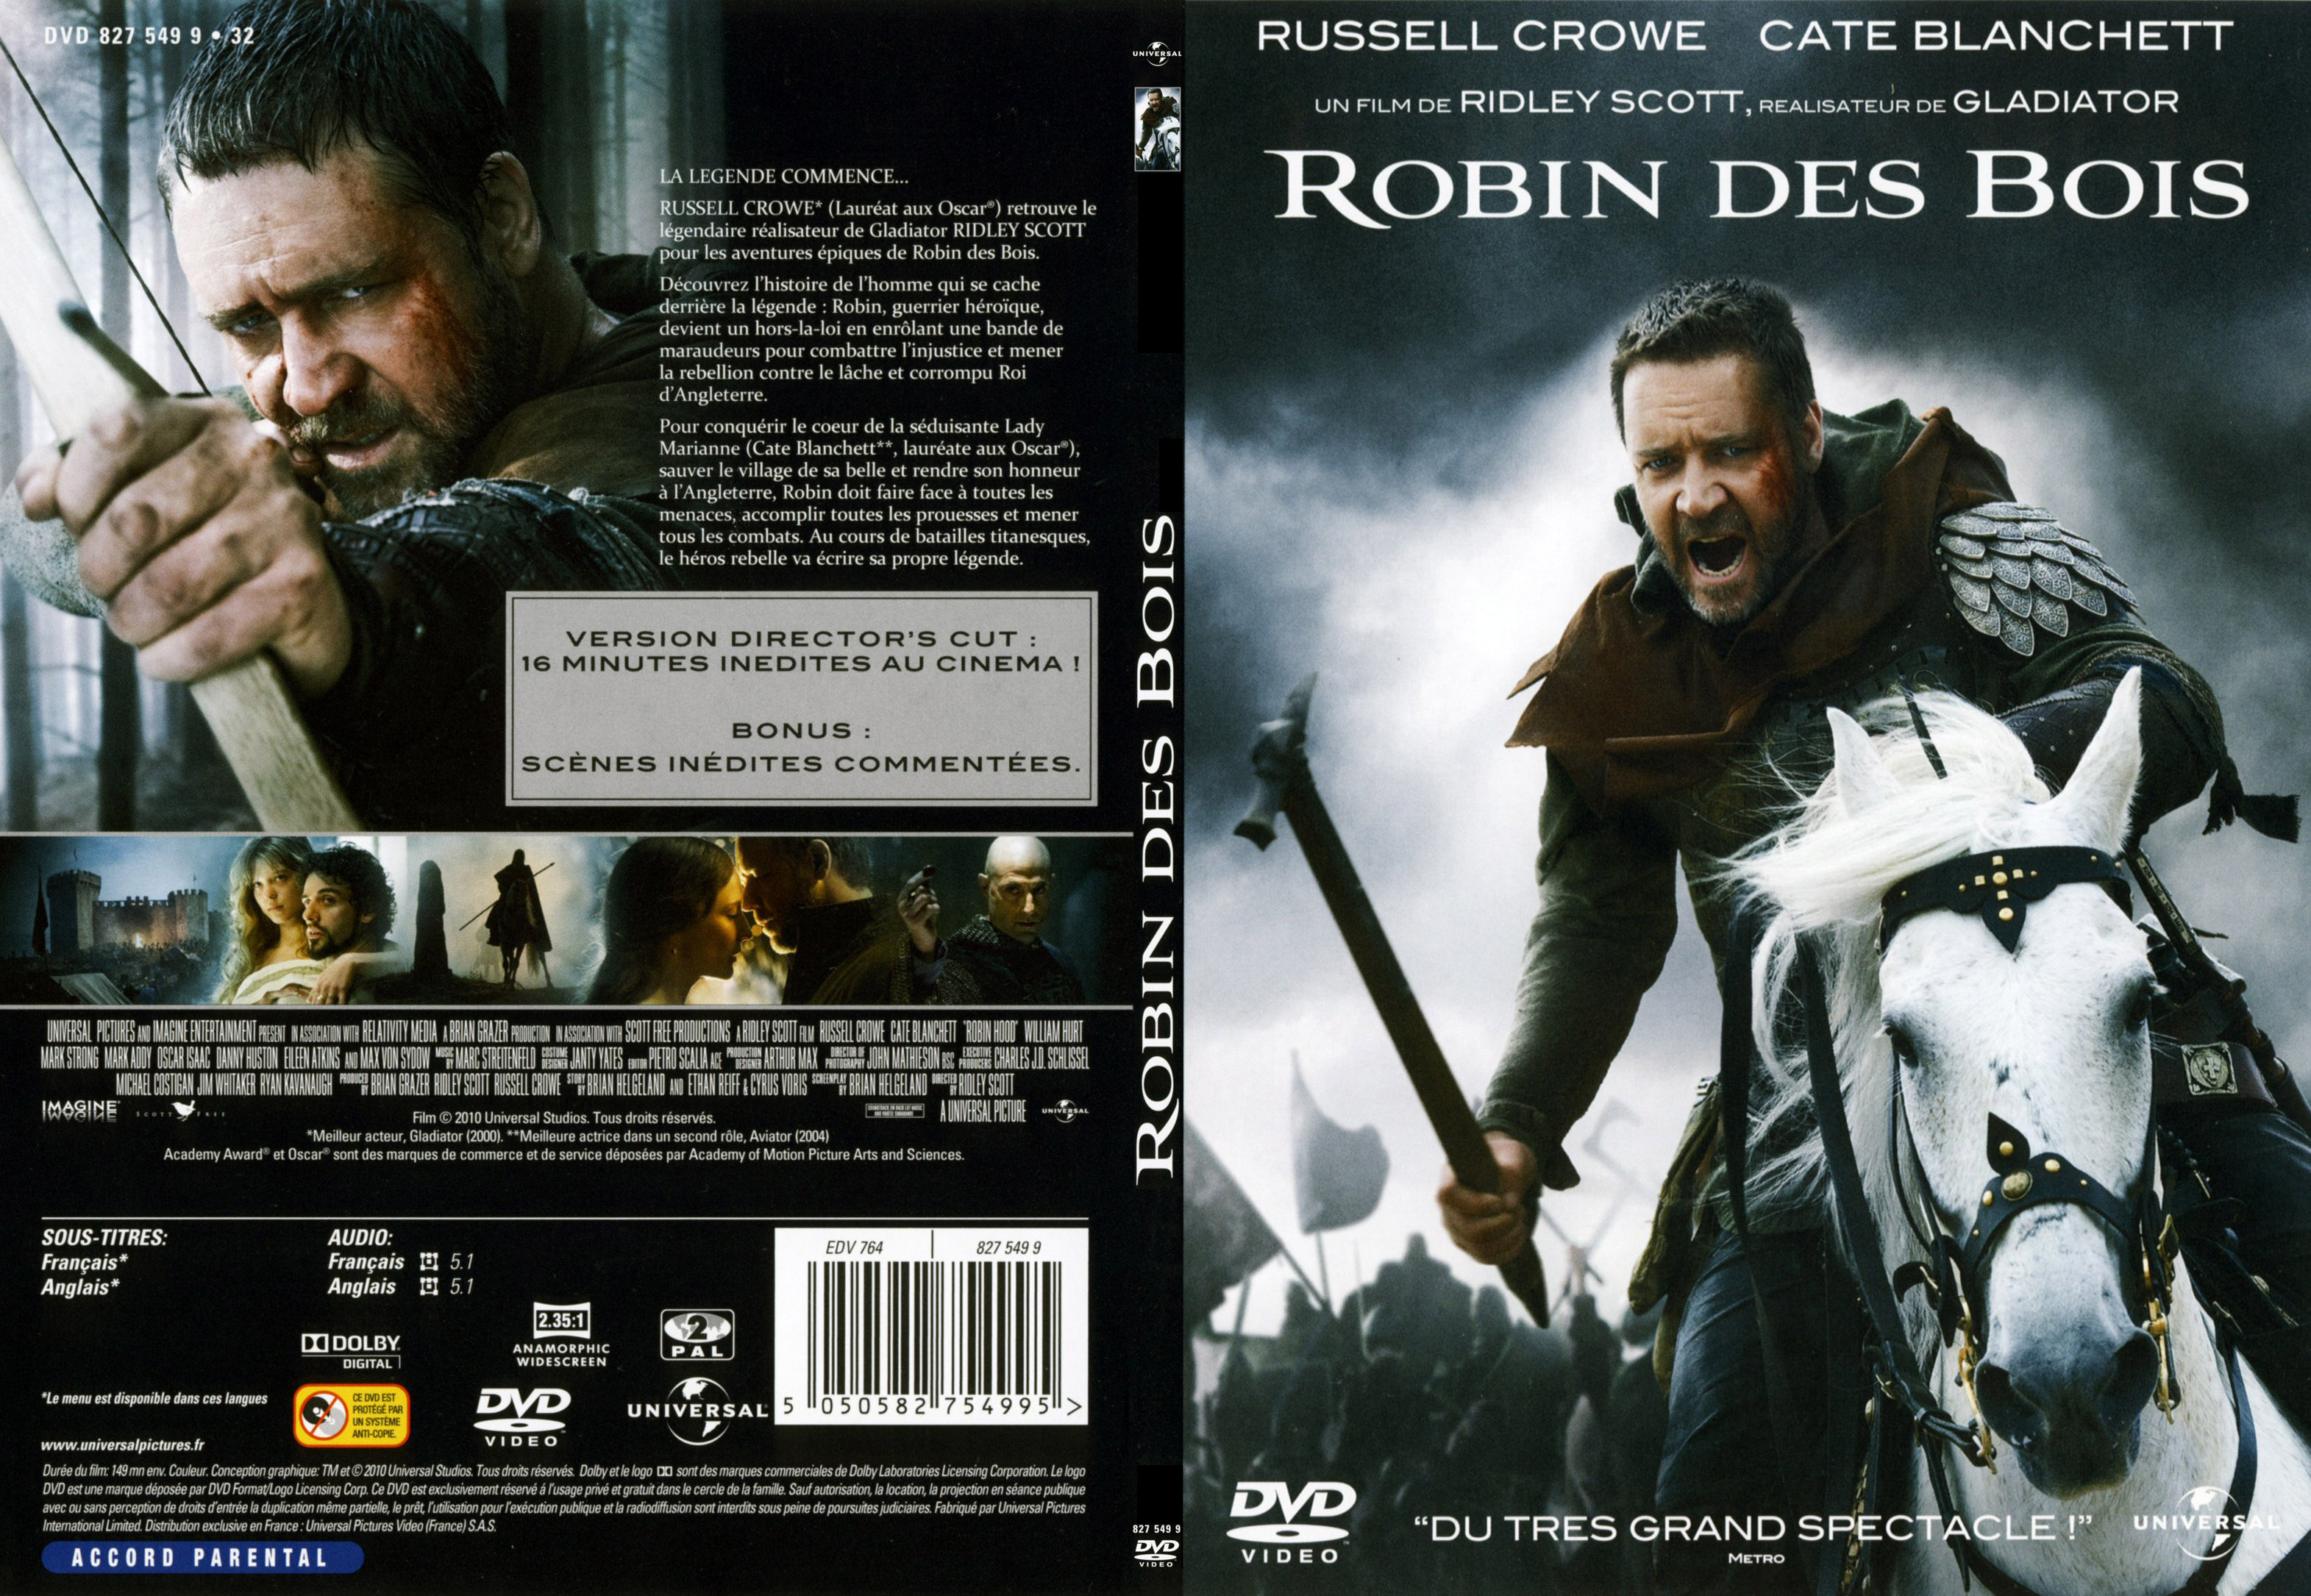 Jaquette DVD Robin des bois (2010) - SLIM